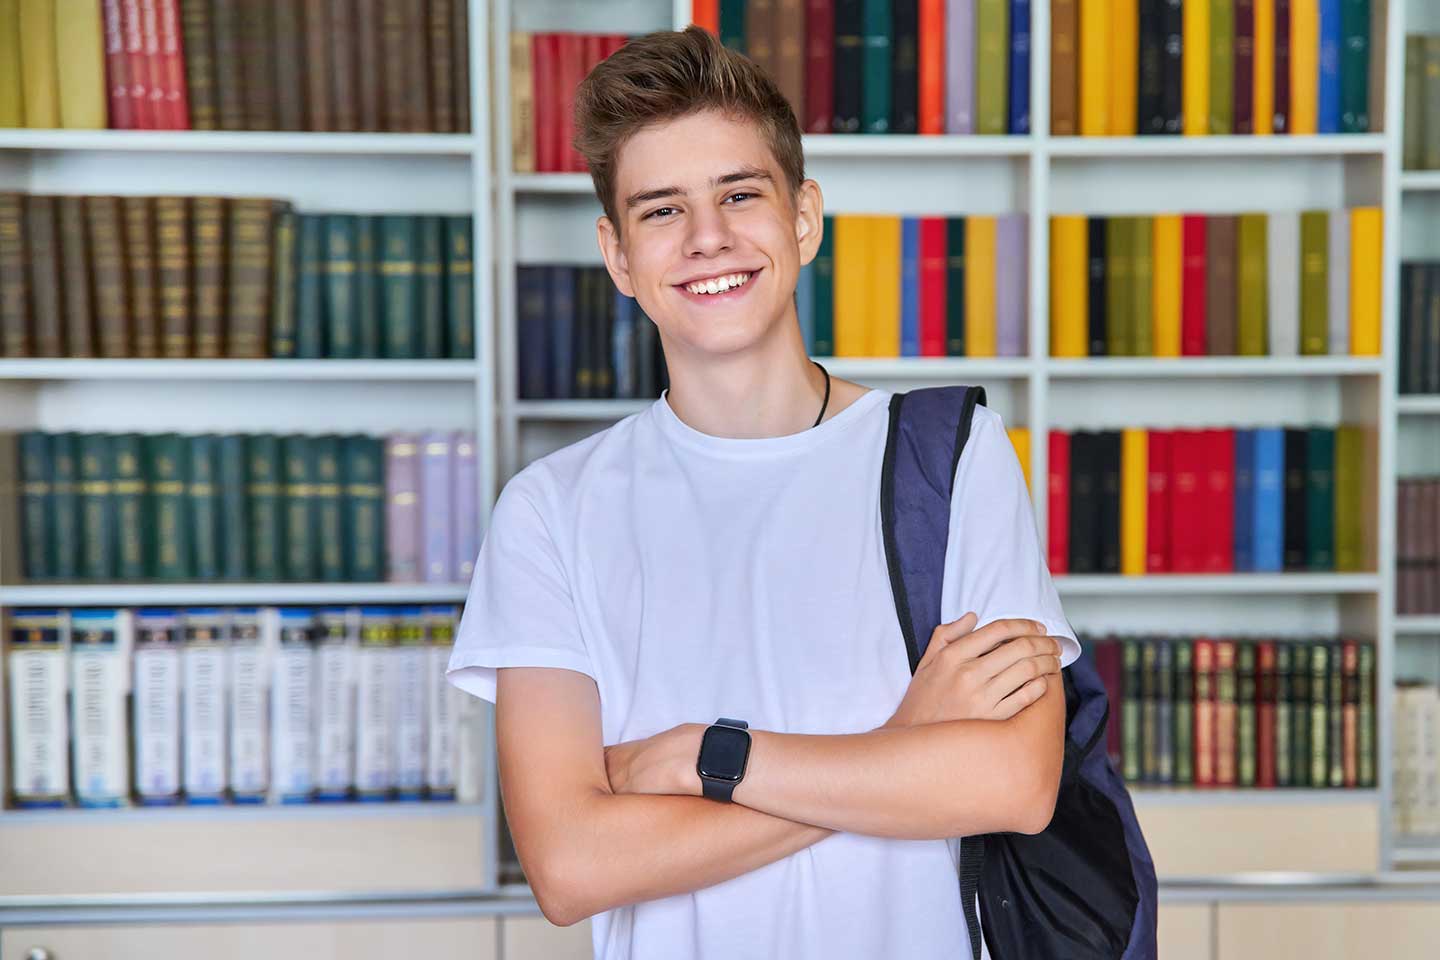 single-portrait-of-smiling-confident-male-student